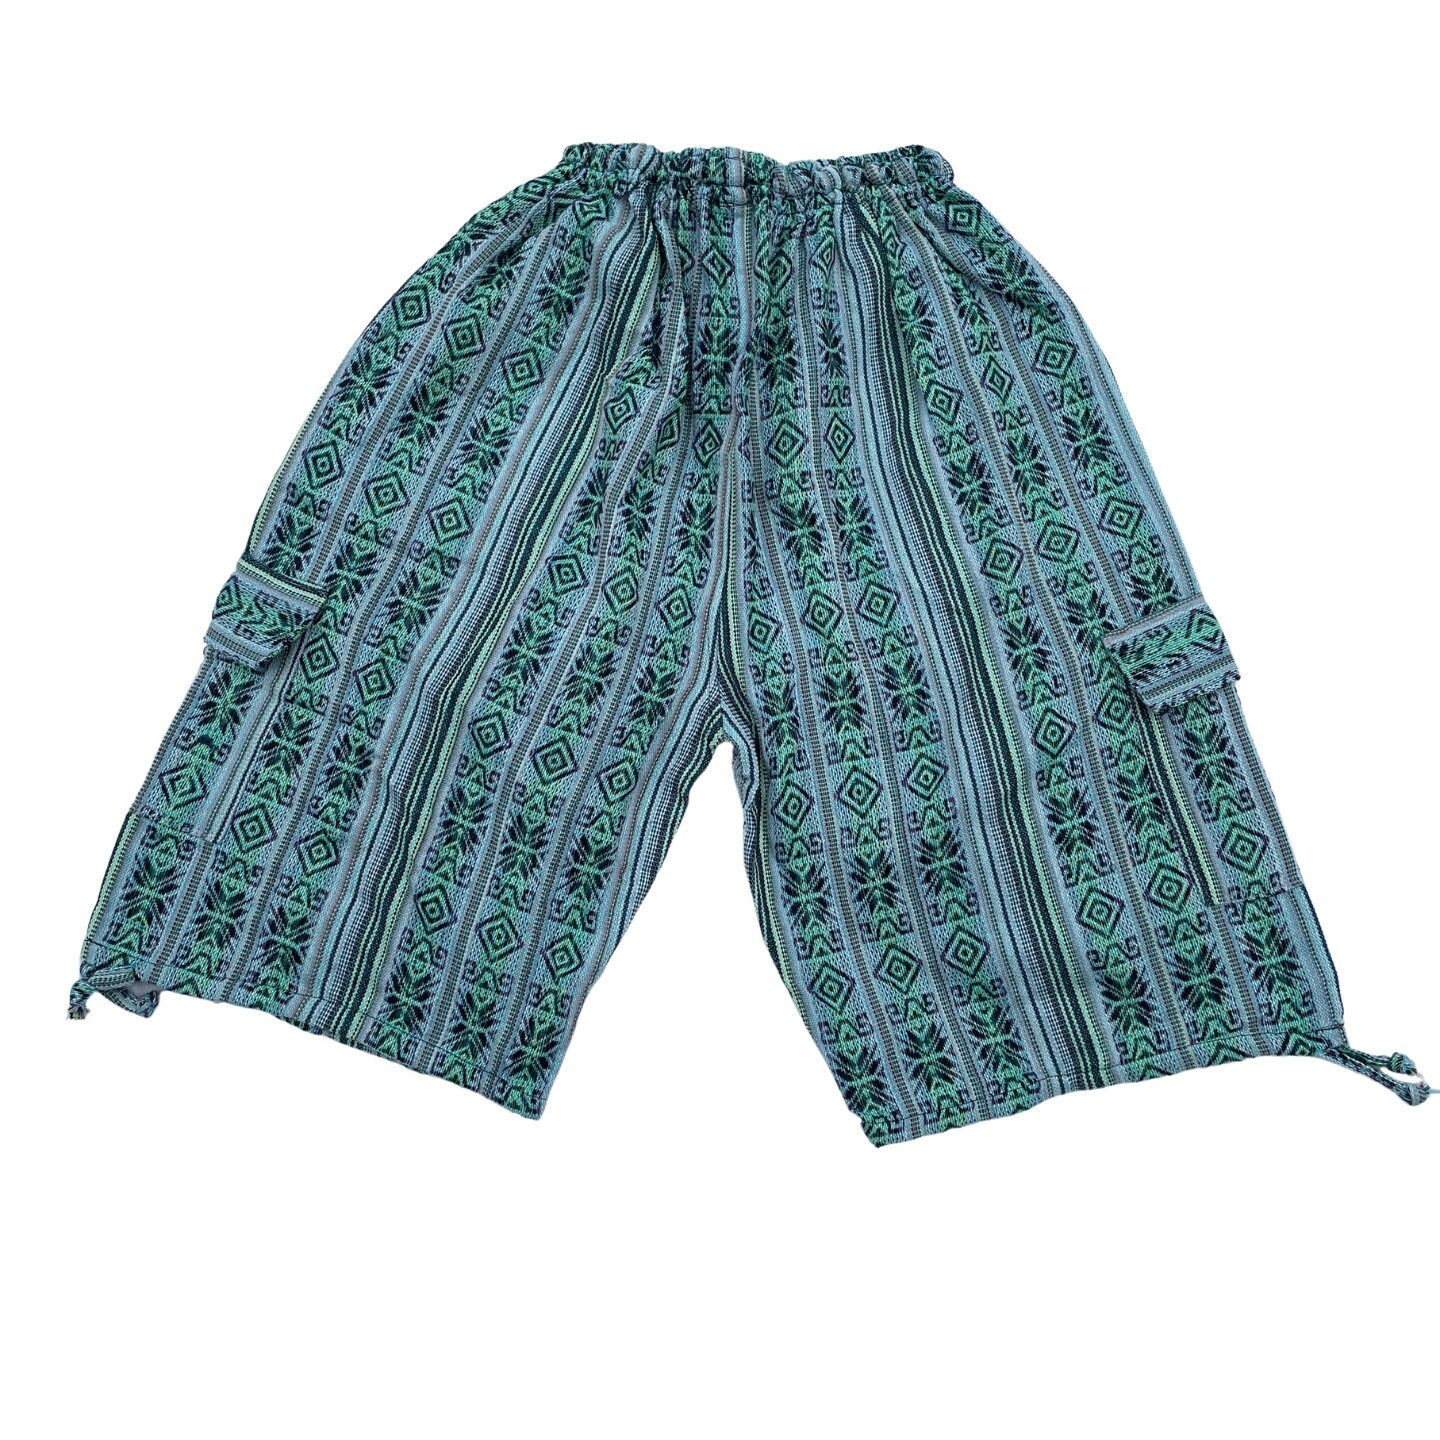 Unisex Woven Boho Cargo Shorts Size L | Gecko Green Black